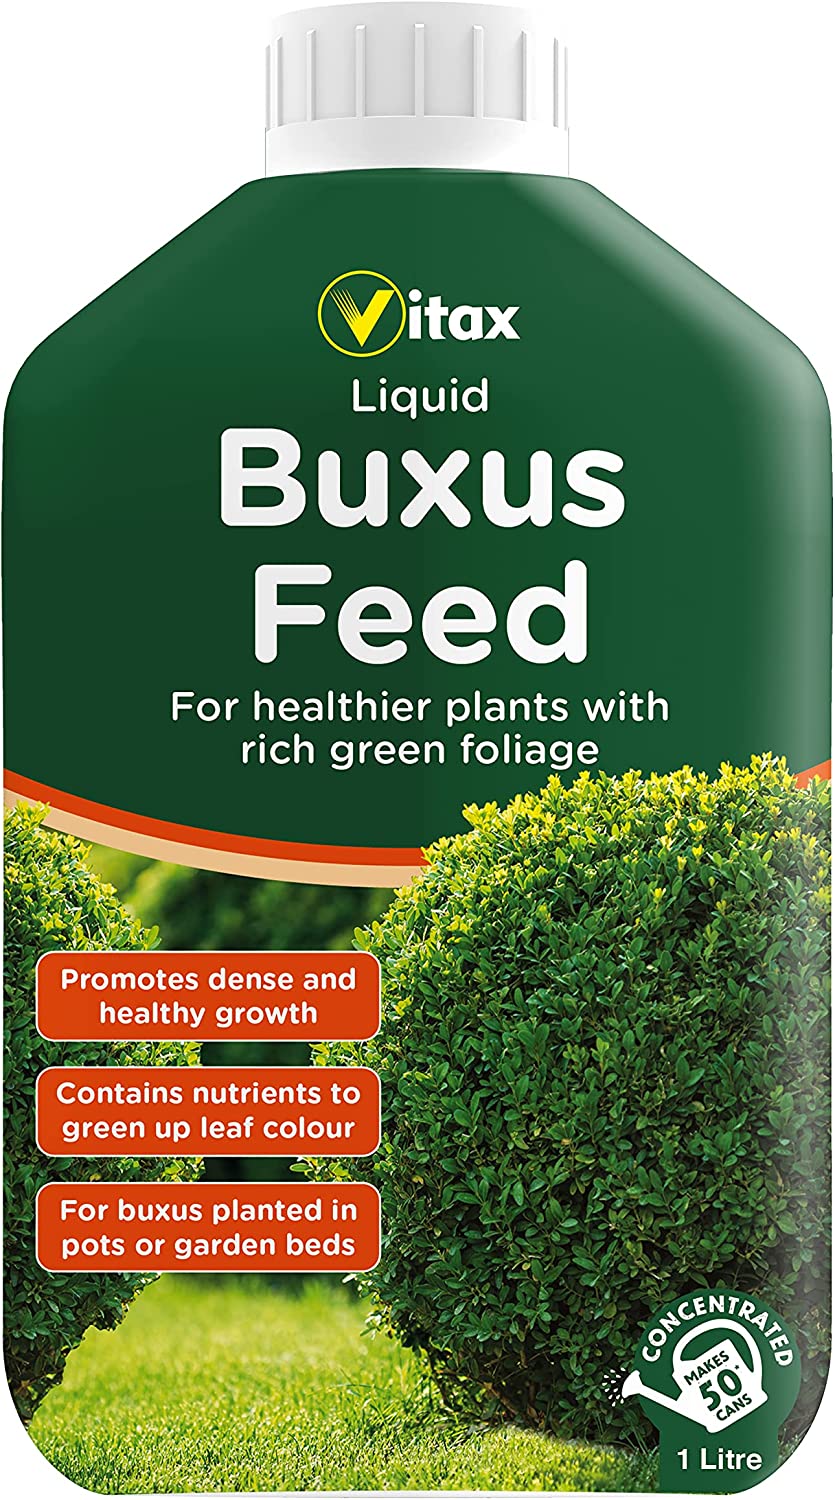 Vitax Buxus Liquid Feed 1 Litre